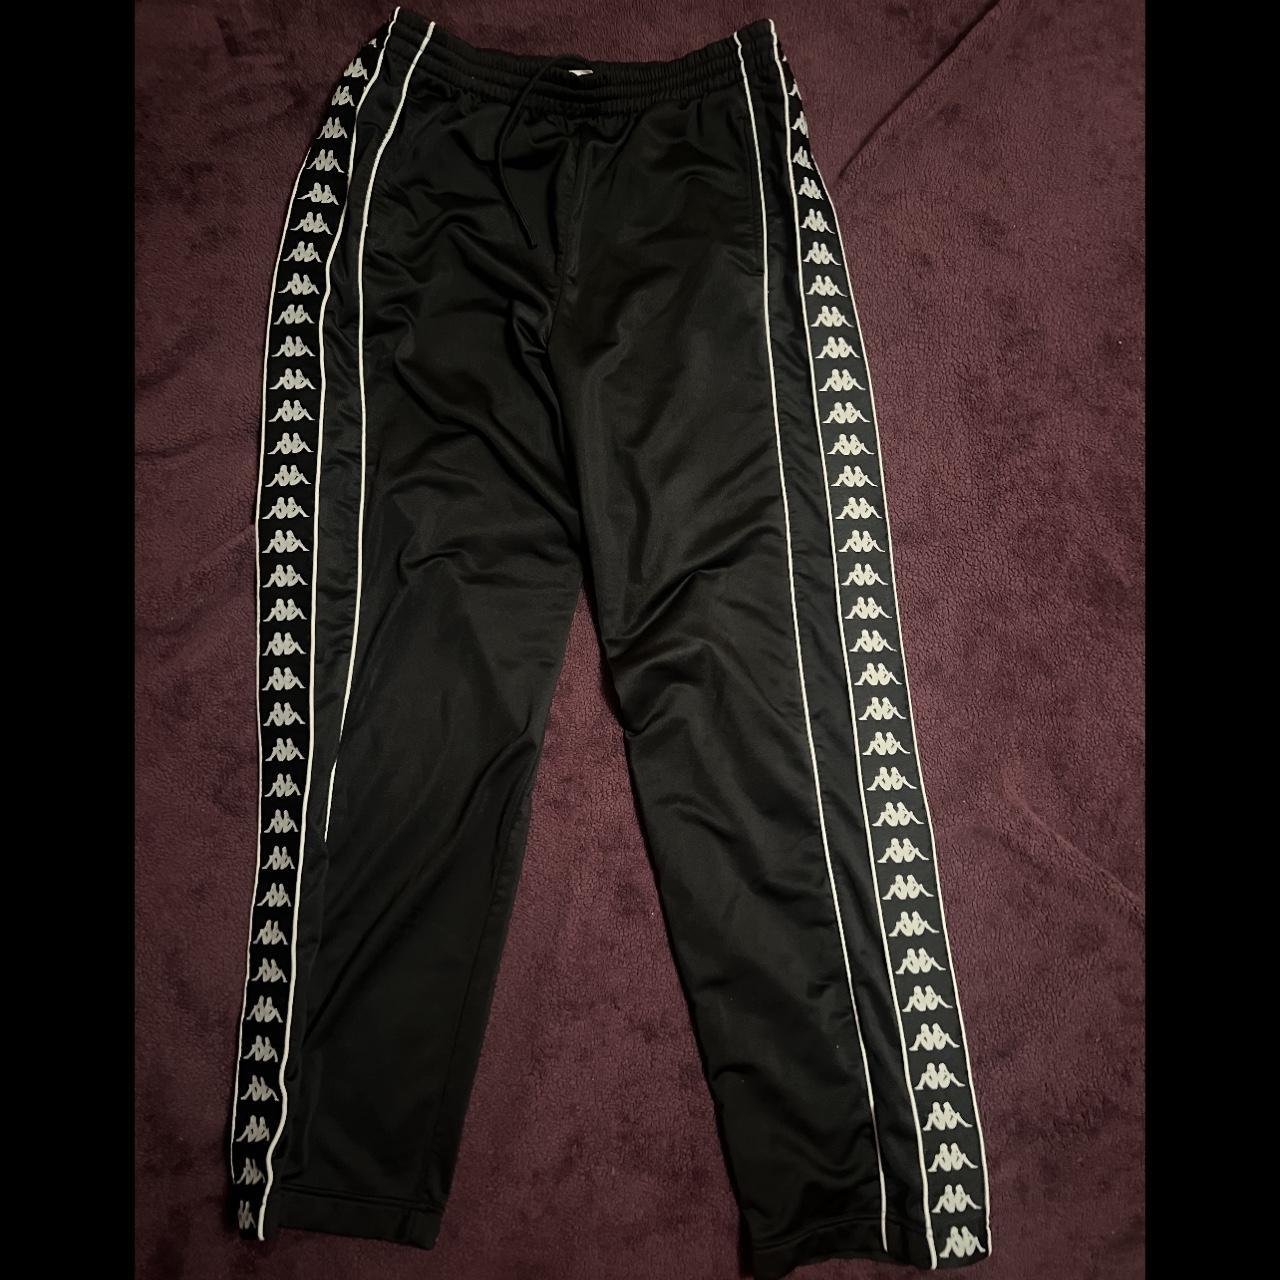 Vintage Black Kappa sweats pants Condition... - Depop